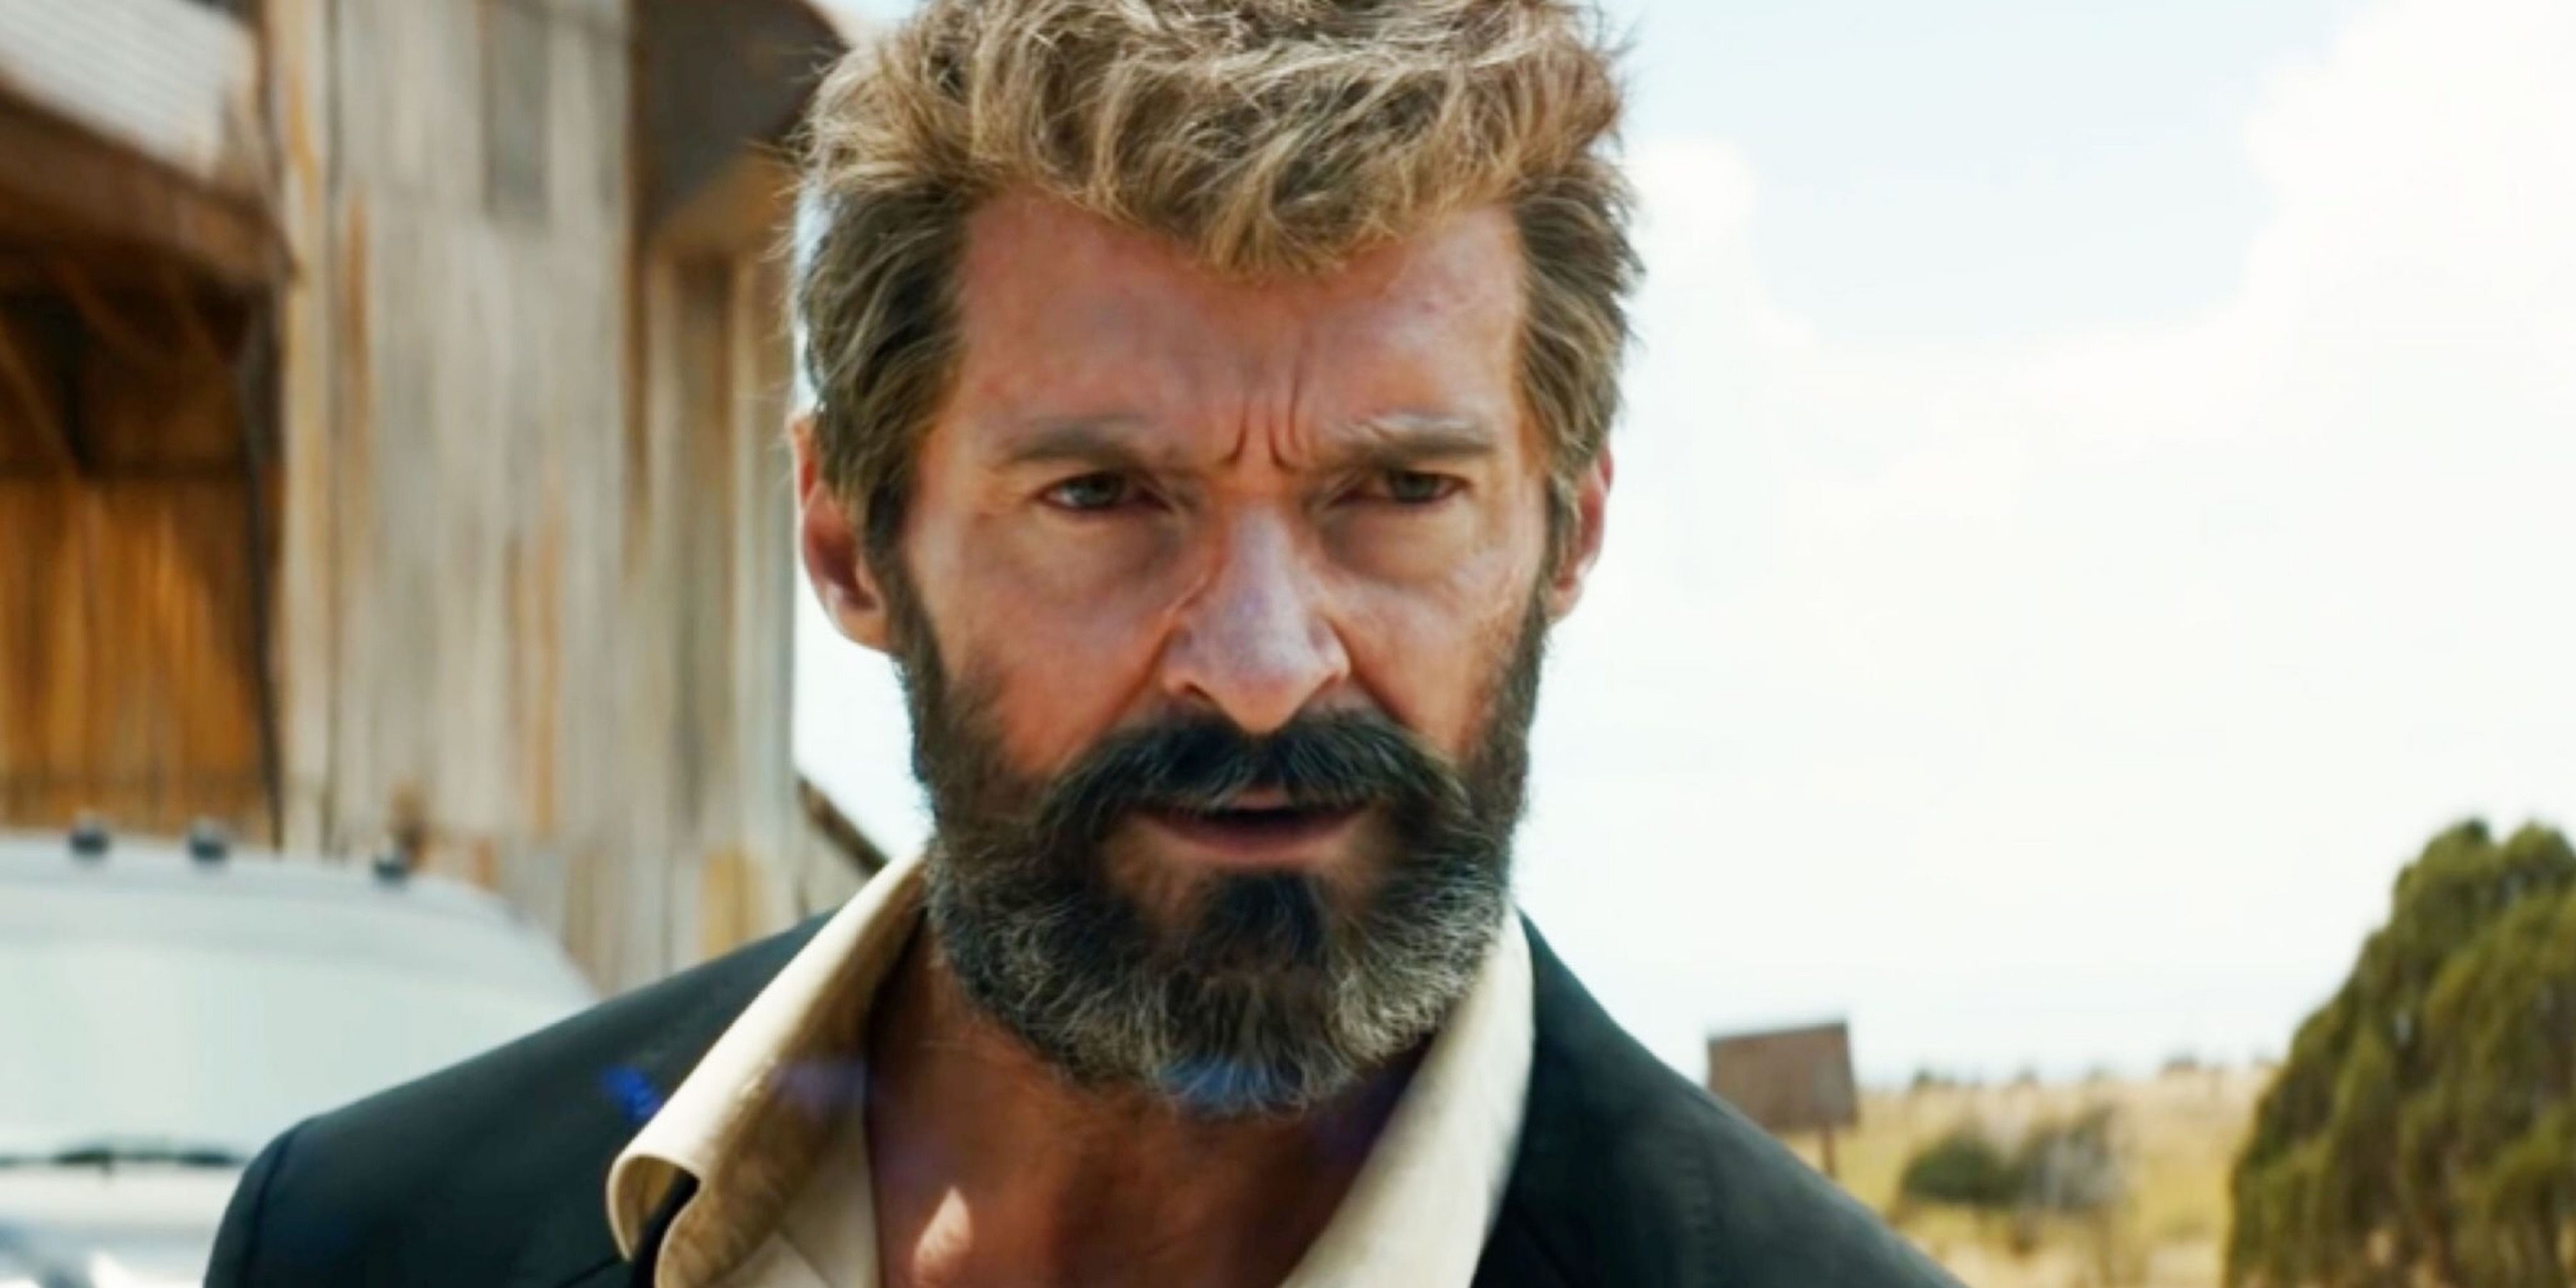 Hugh Jackman as Old Man Logan from 2017 Logan film